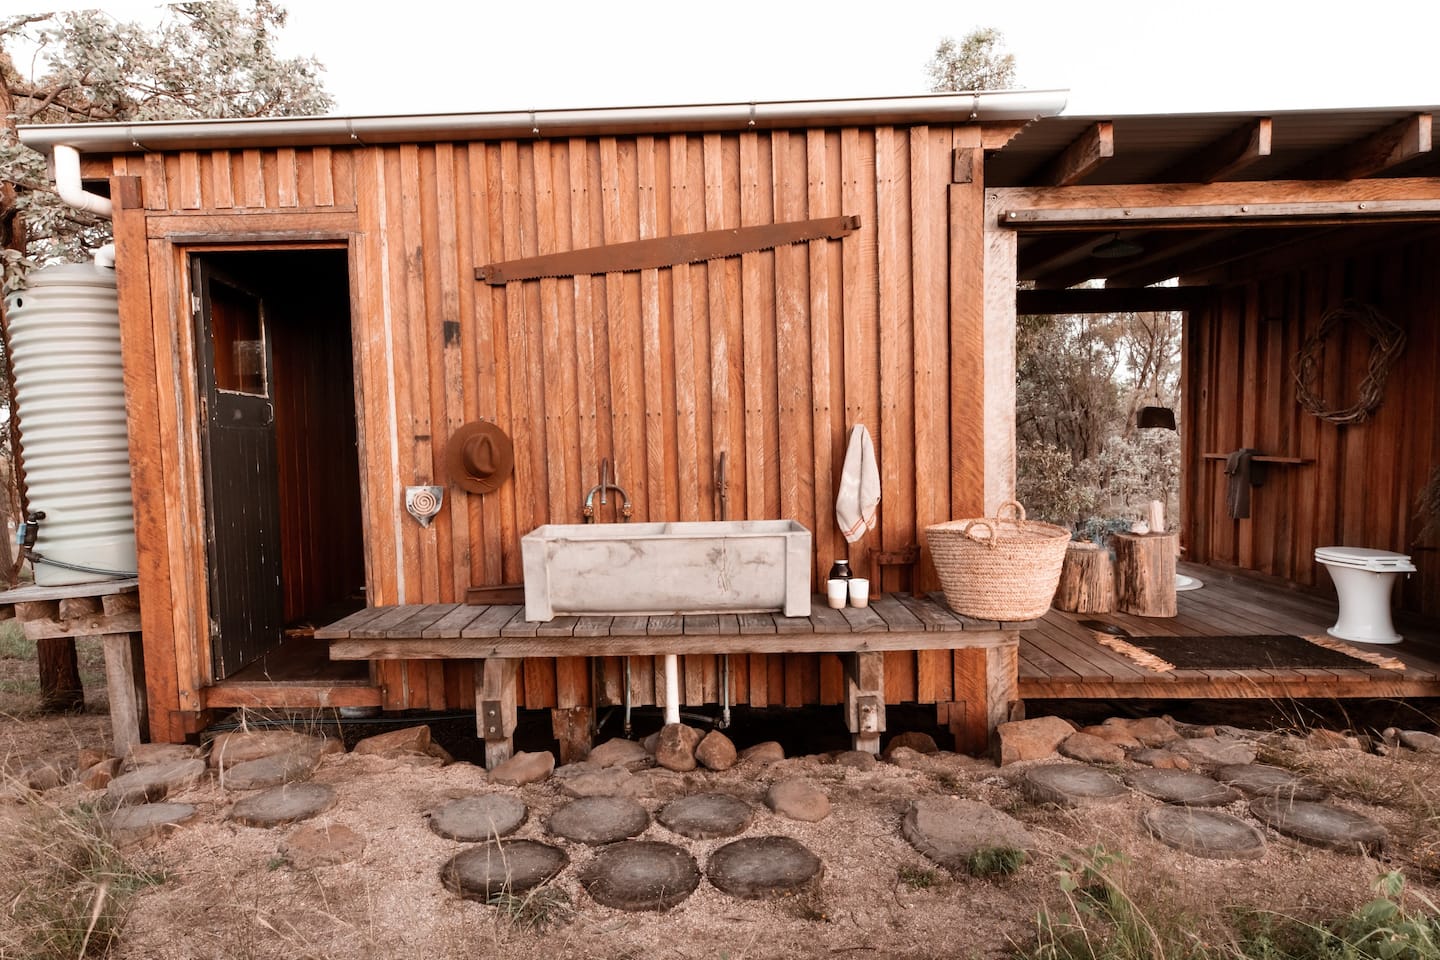 a rustic cabin in a farm setting